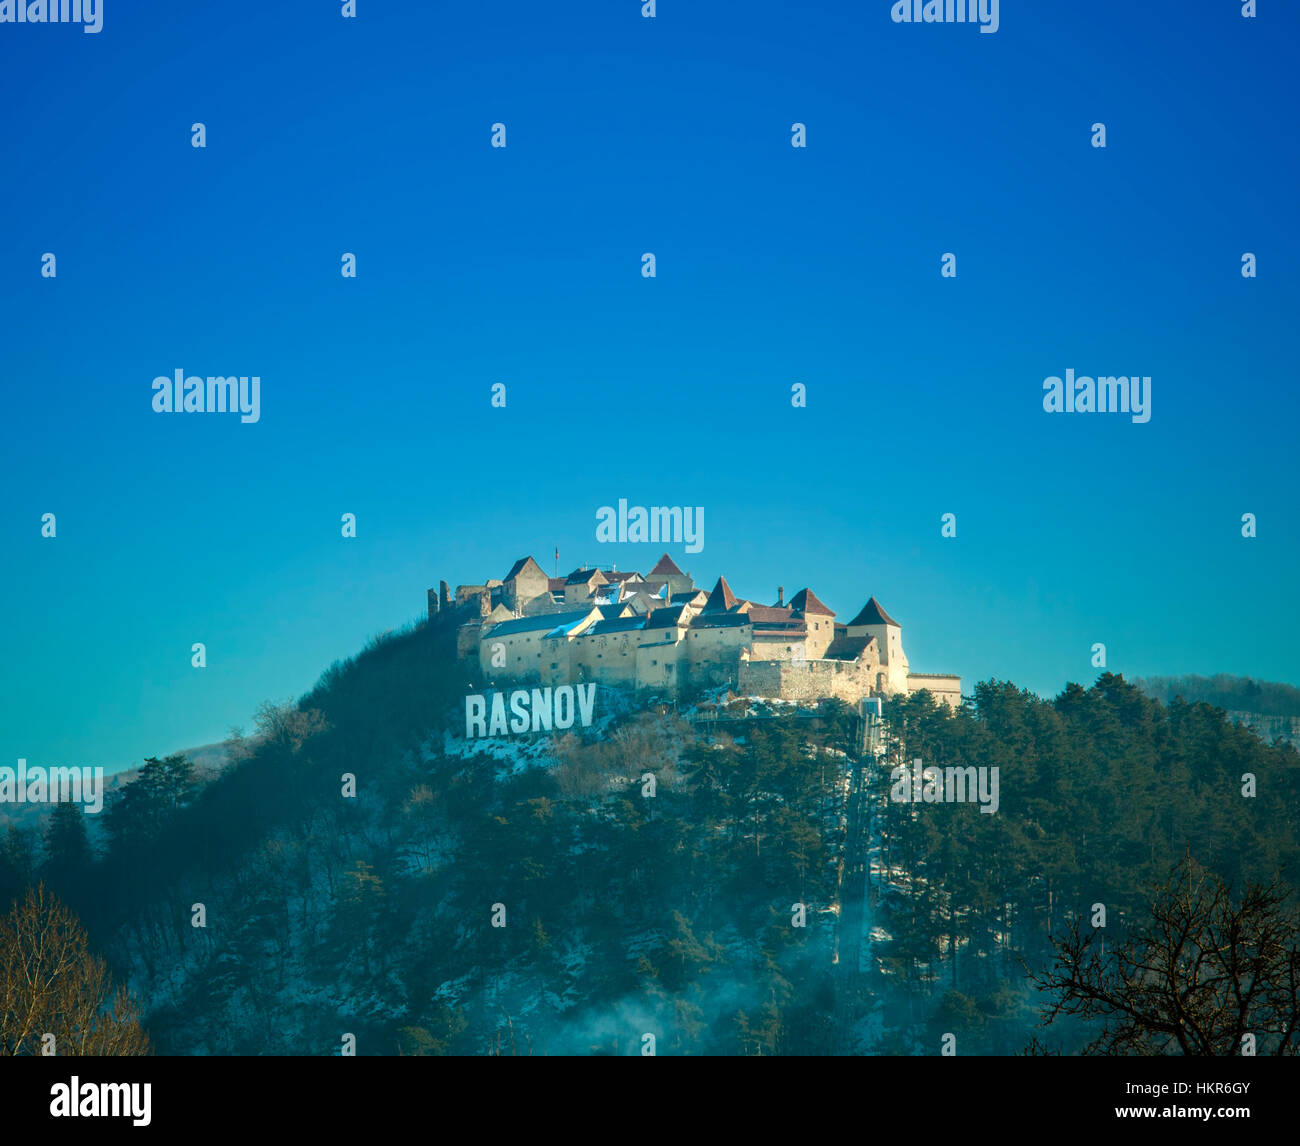 Rasnov castle and fortress in Romania Stock Photo